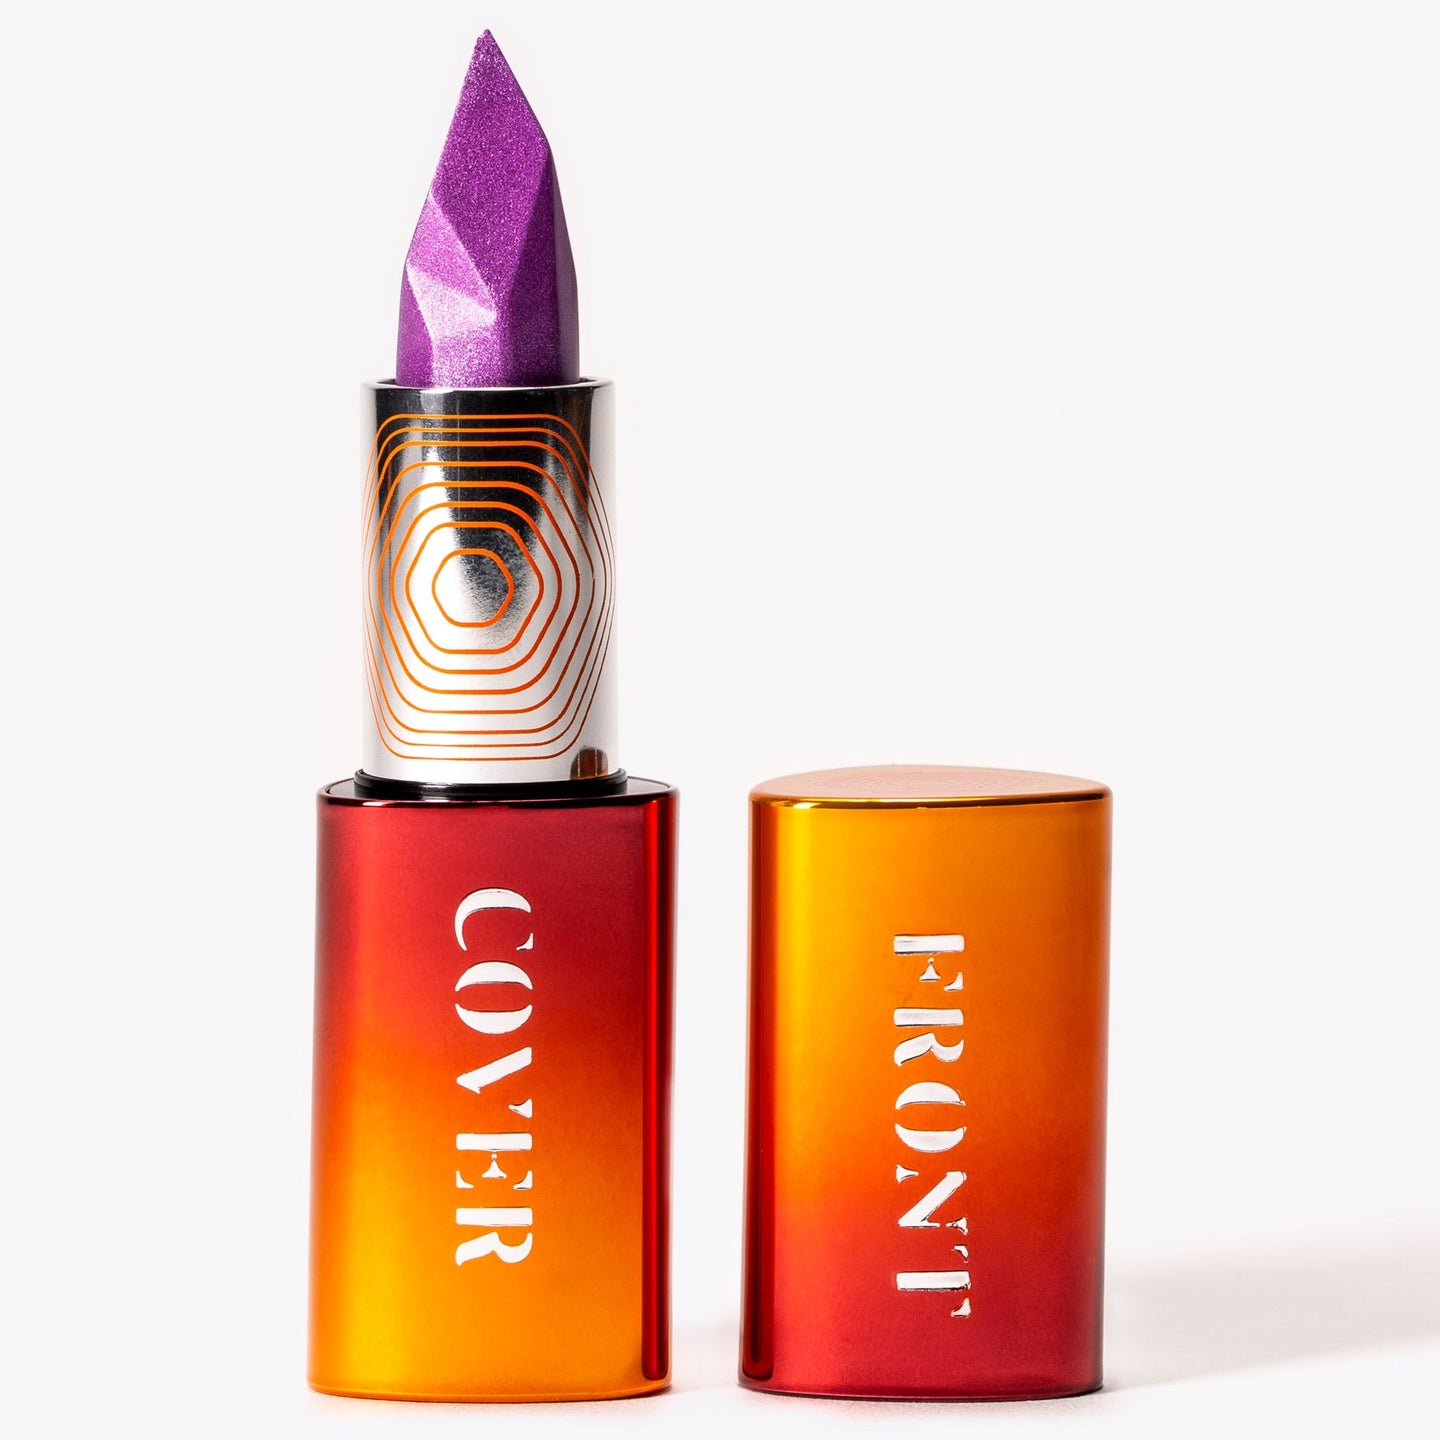 Mercury Passion | Shimmer Lipstick